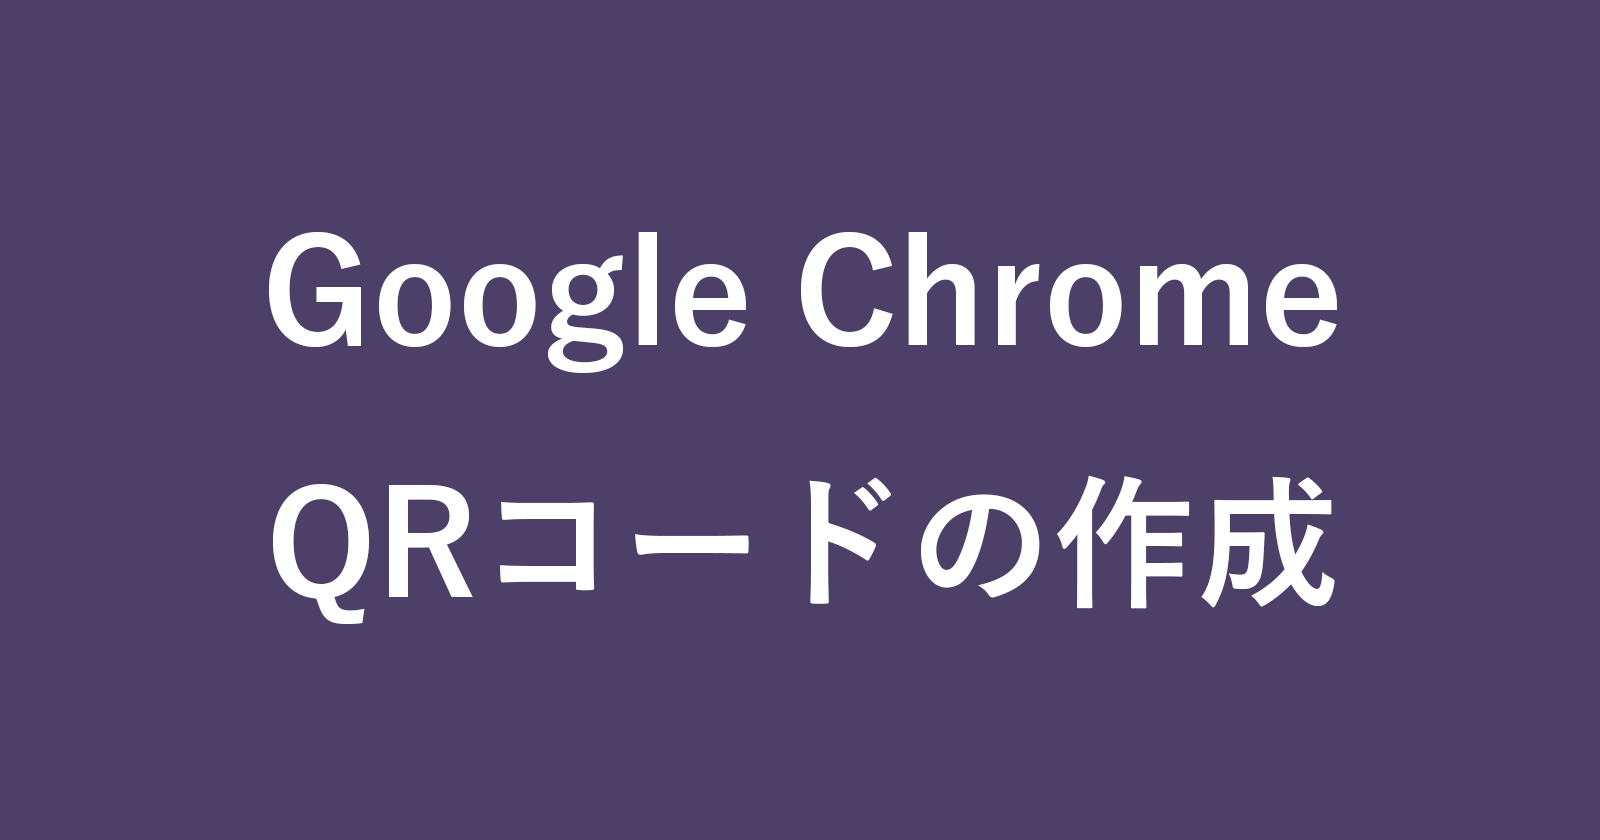 google chrome qr code